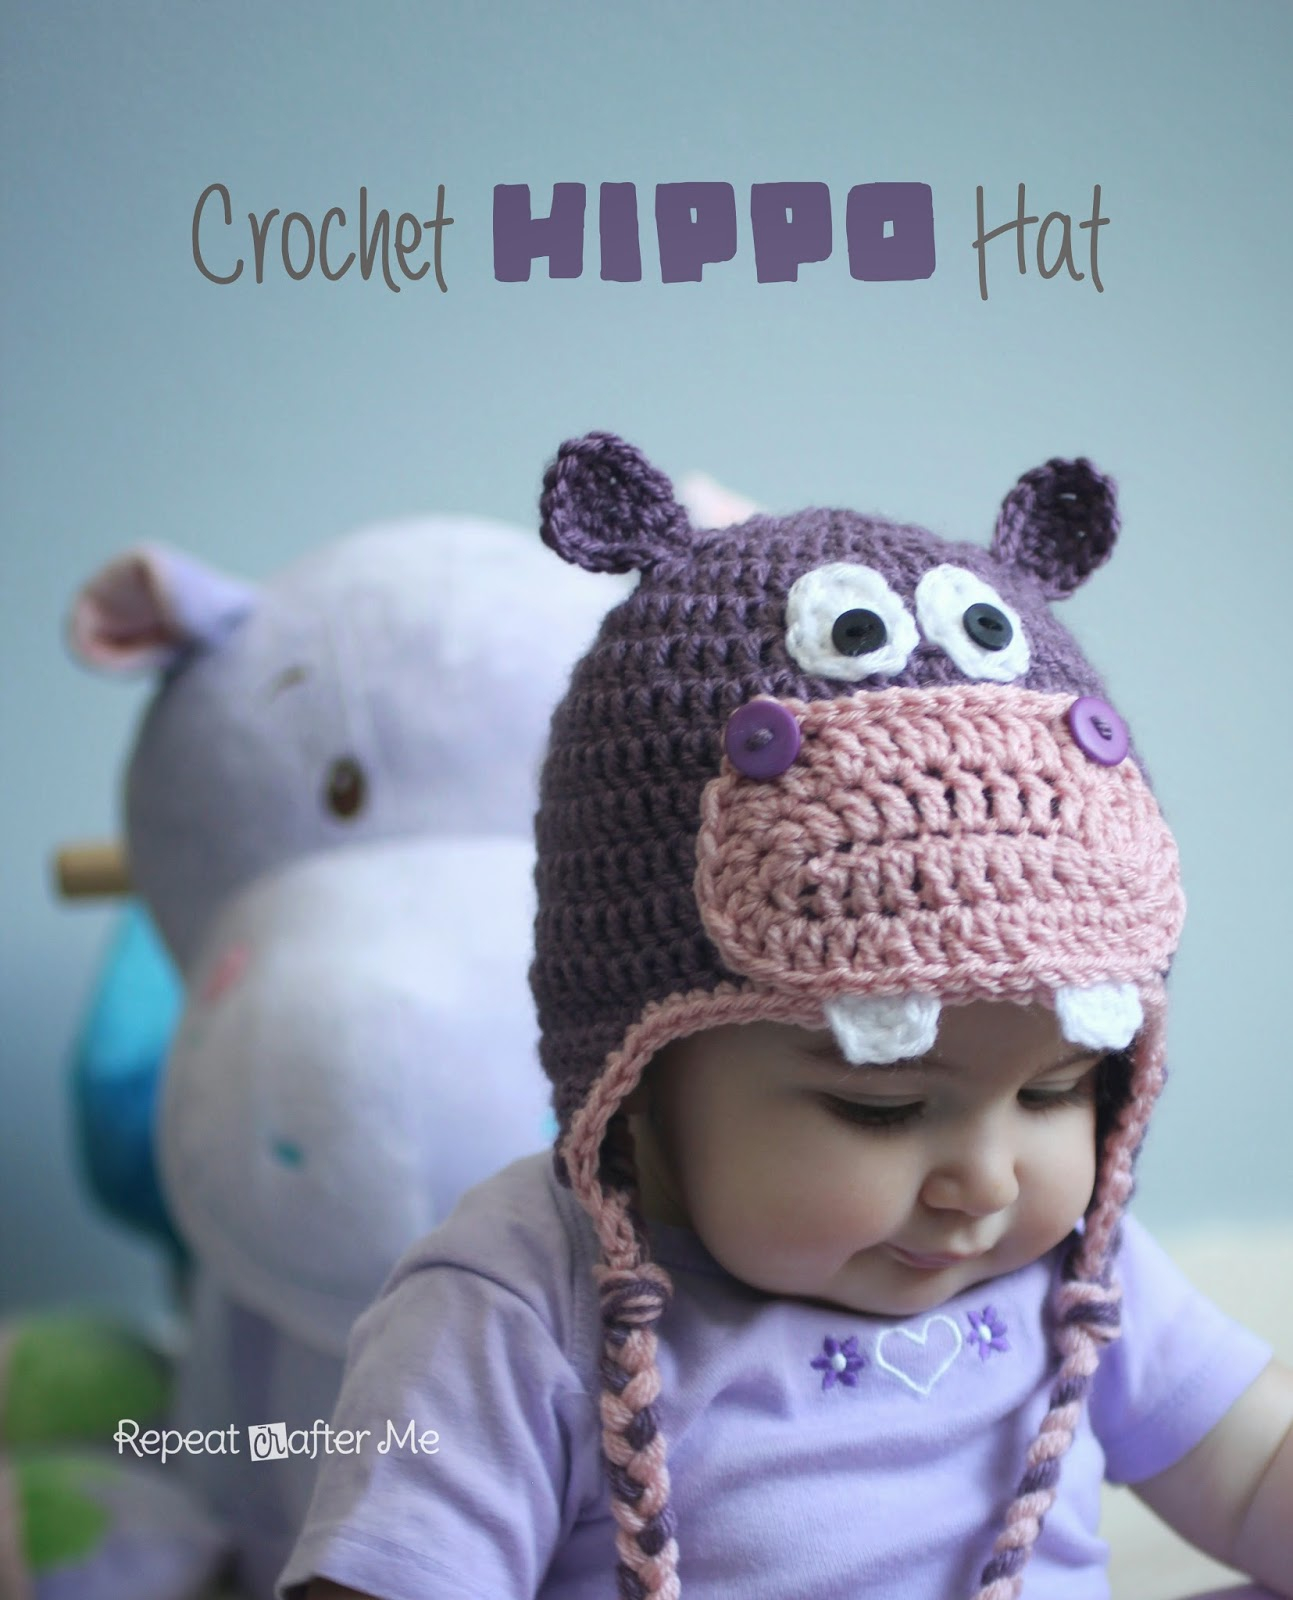 Crochet Patterns Baby Hats 41 Adorable Crochet Ba Hats Patterns To Make